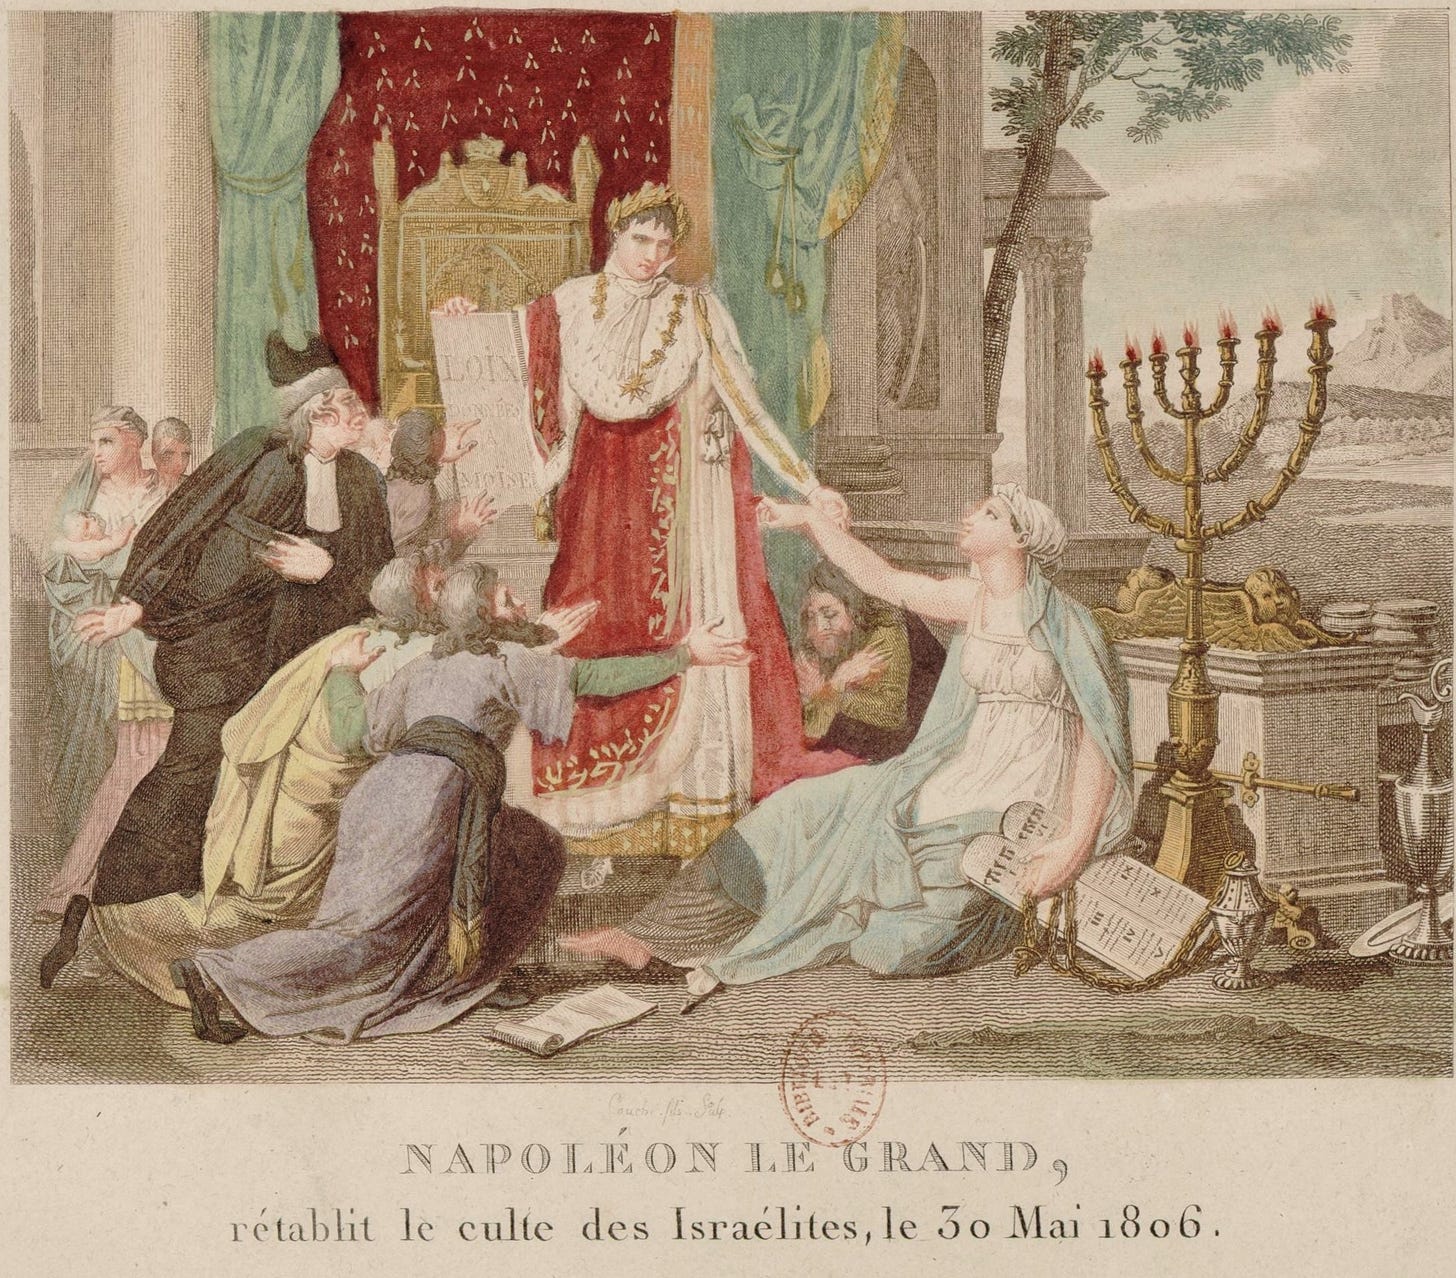 Jewish emancipation - Wikipedia